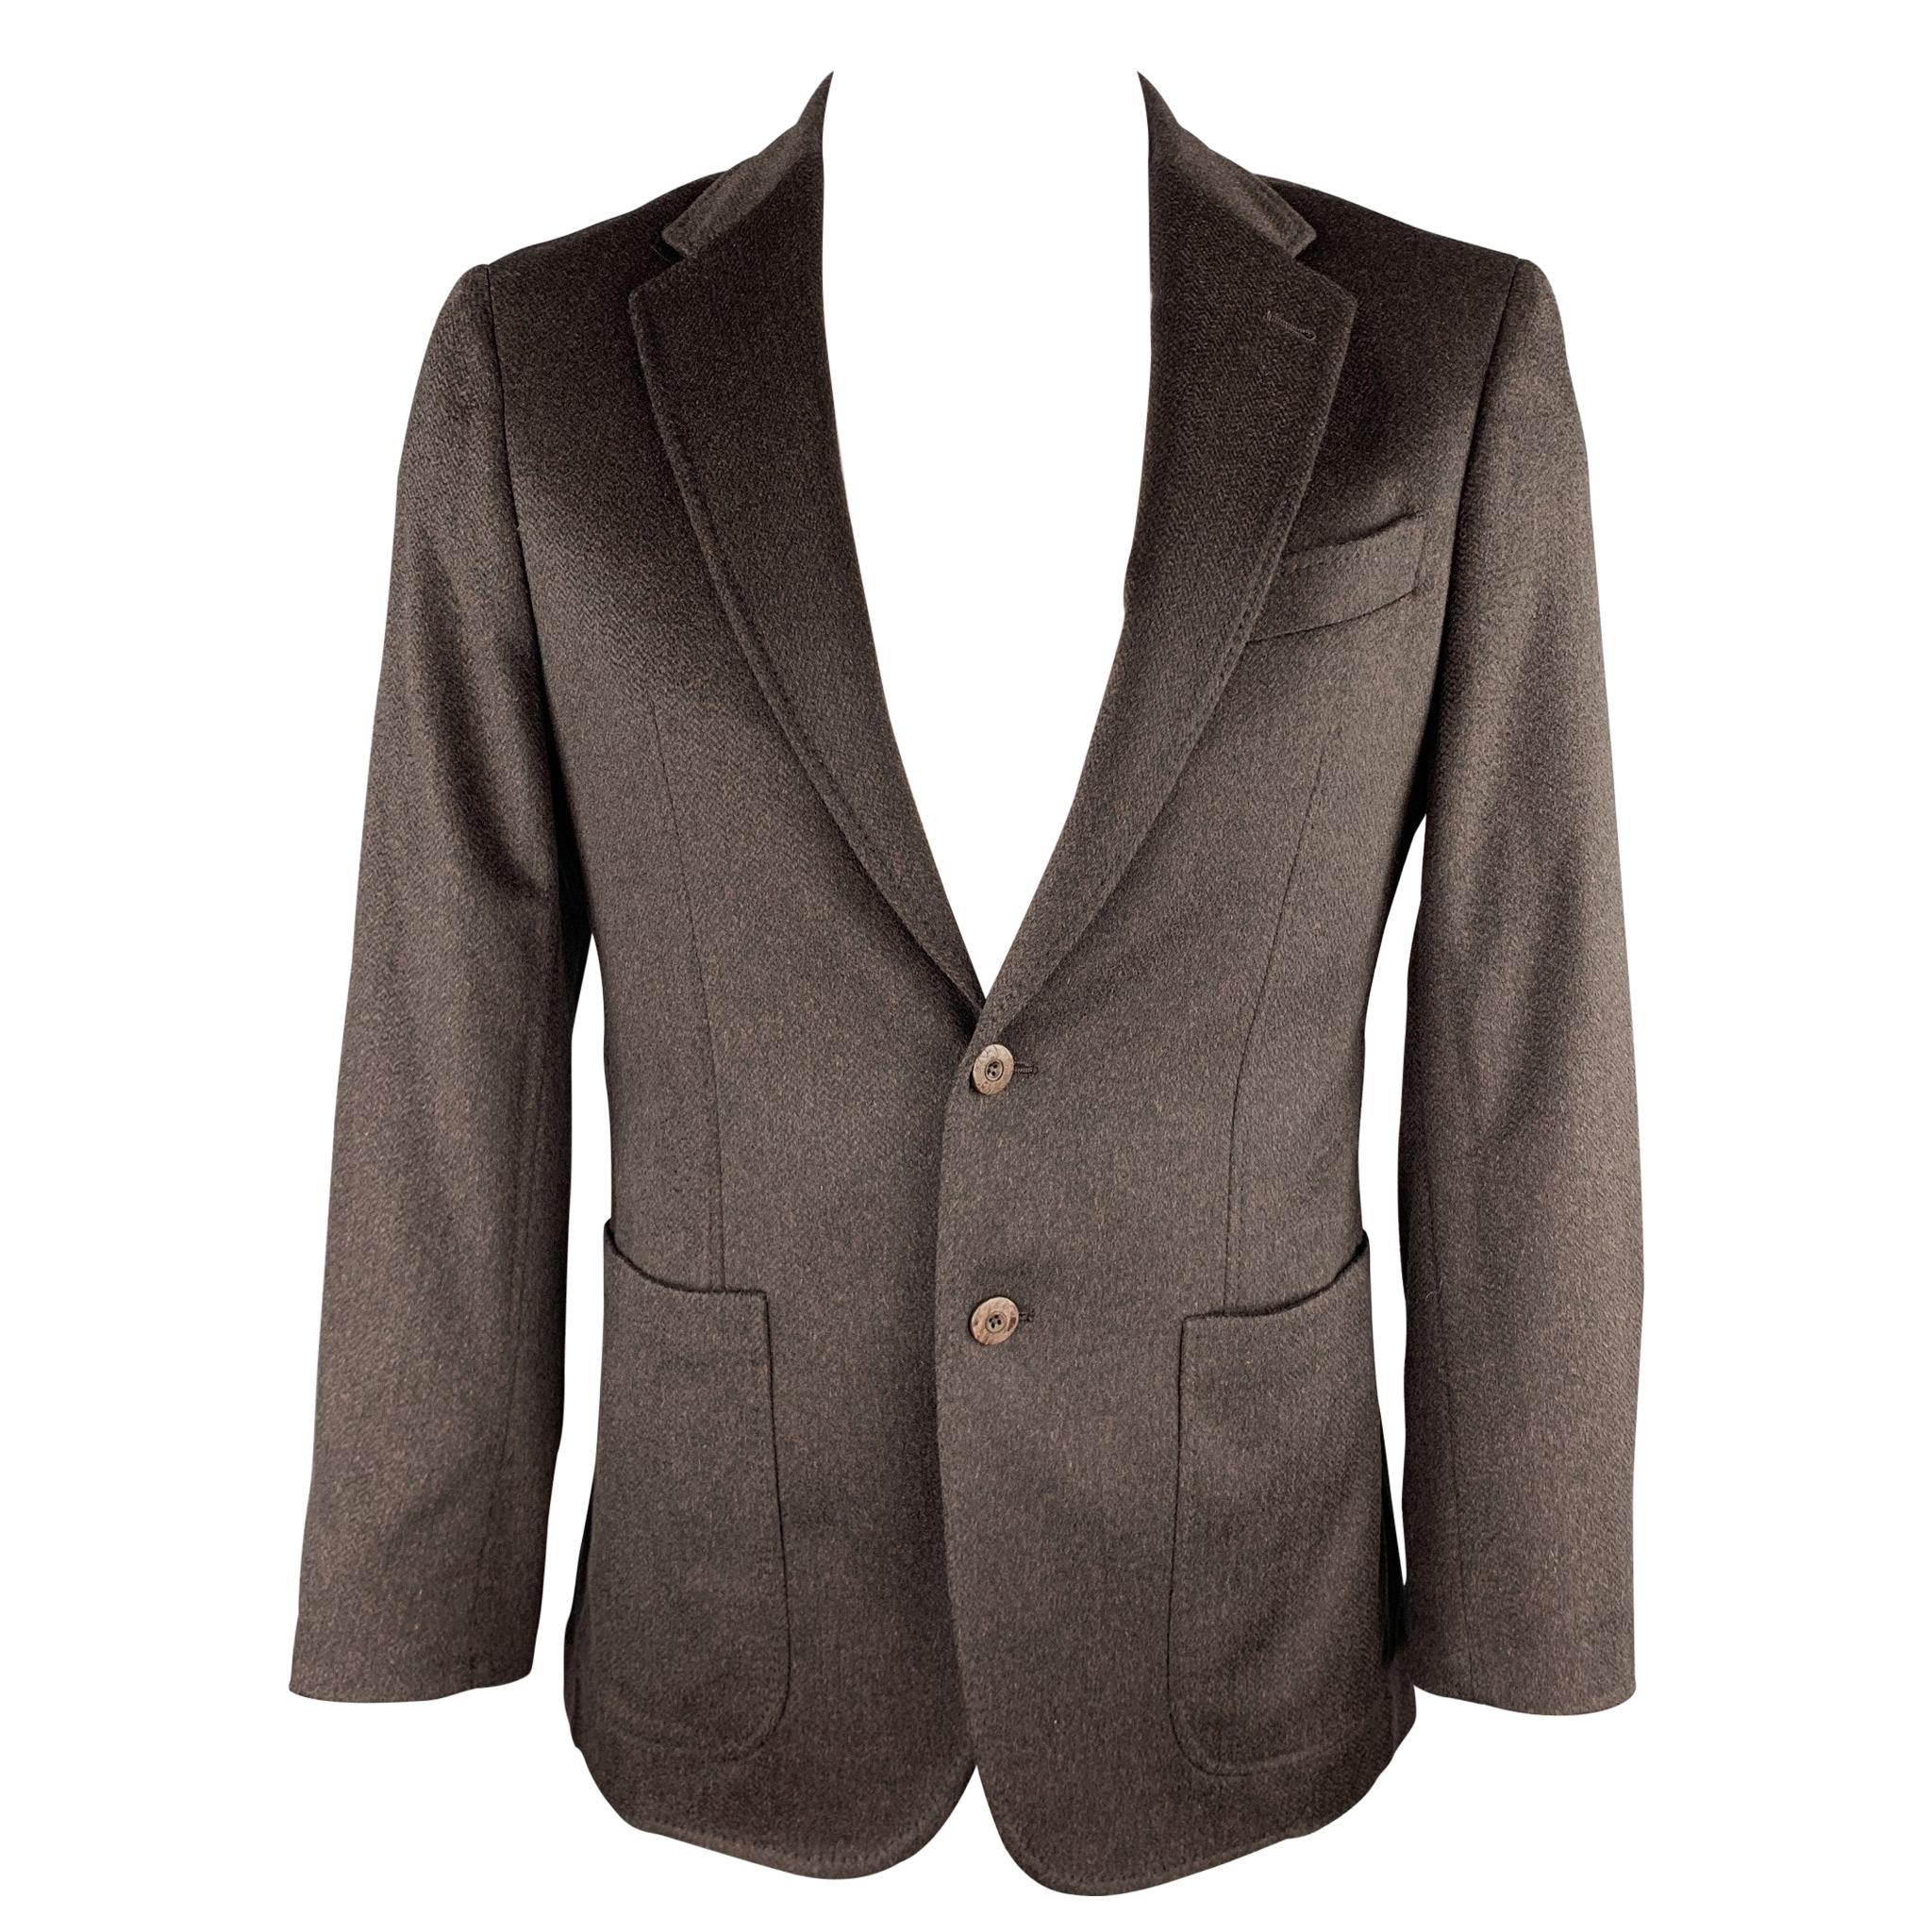 JOSEPH ABBOUD Size 40 Brown Textured Cashmere Sport Coat / Blazer Jacket